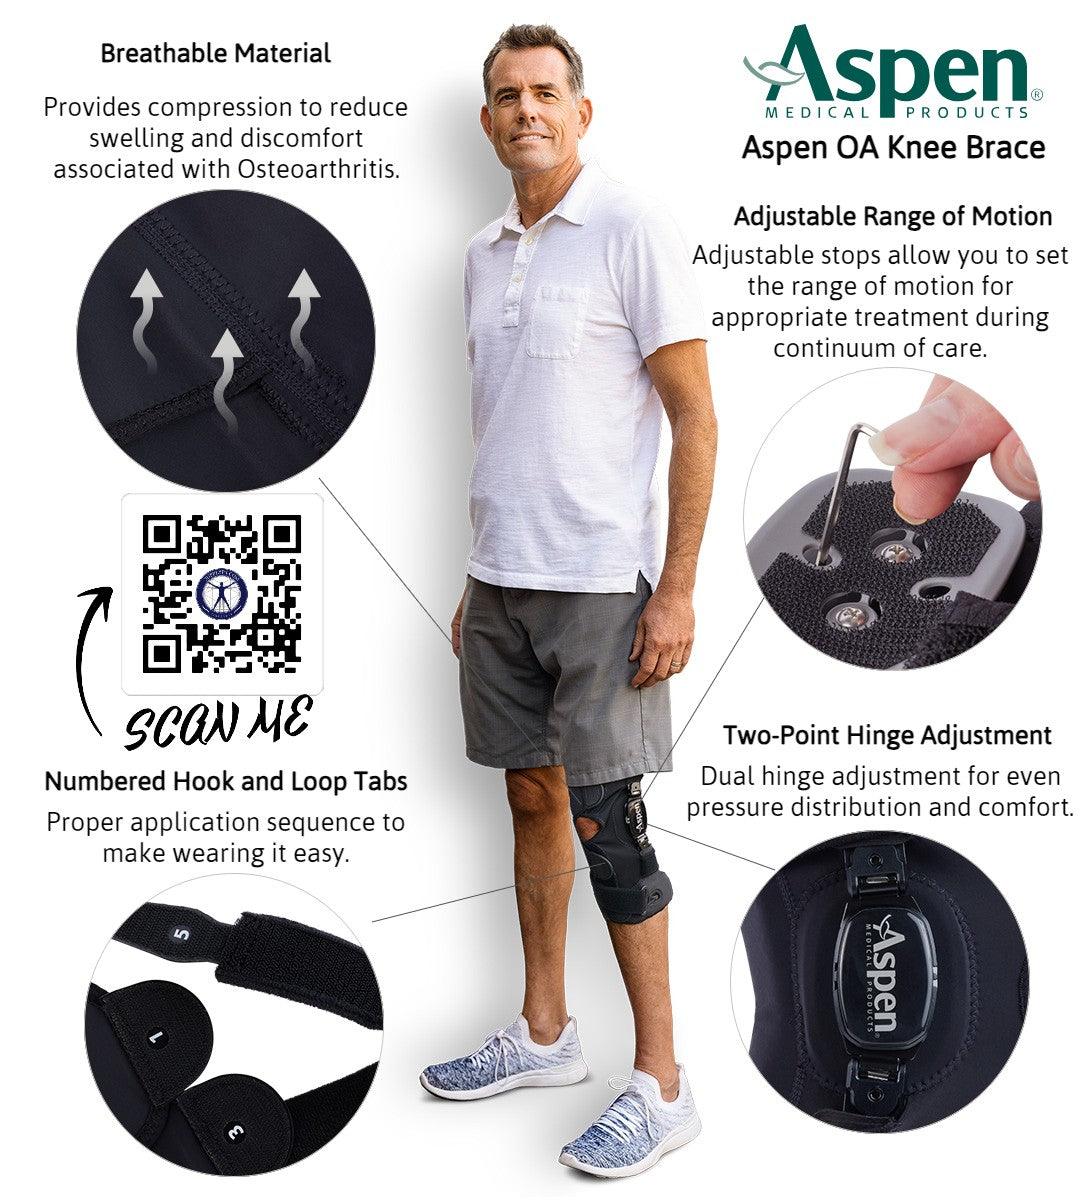 Aspen® OA Knee Wrap - 651021 Aspen® OA Knee Wrap - undefined by Supply Physical Therapy Aspen, Brace, Hip and Knee, Knee, Knee brace